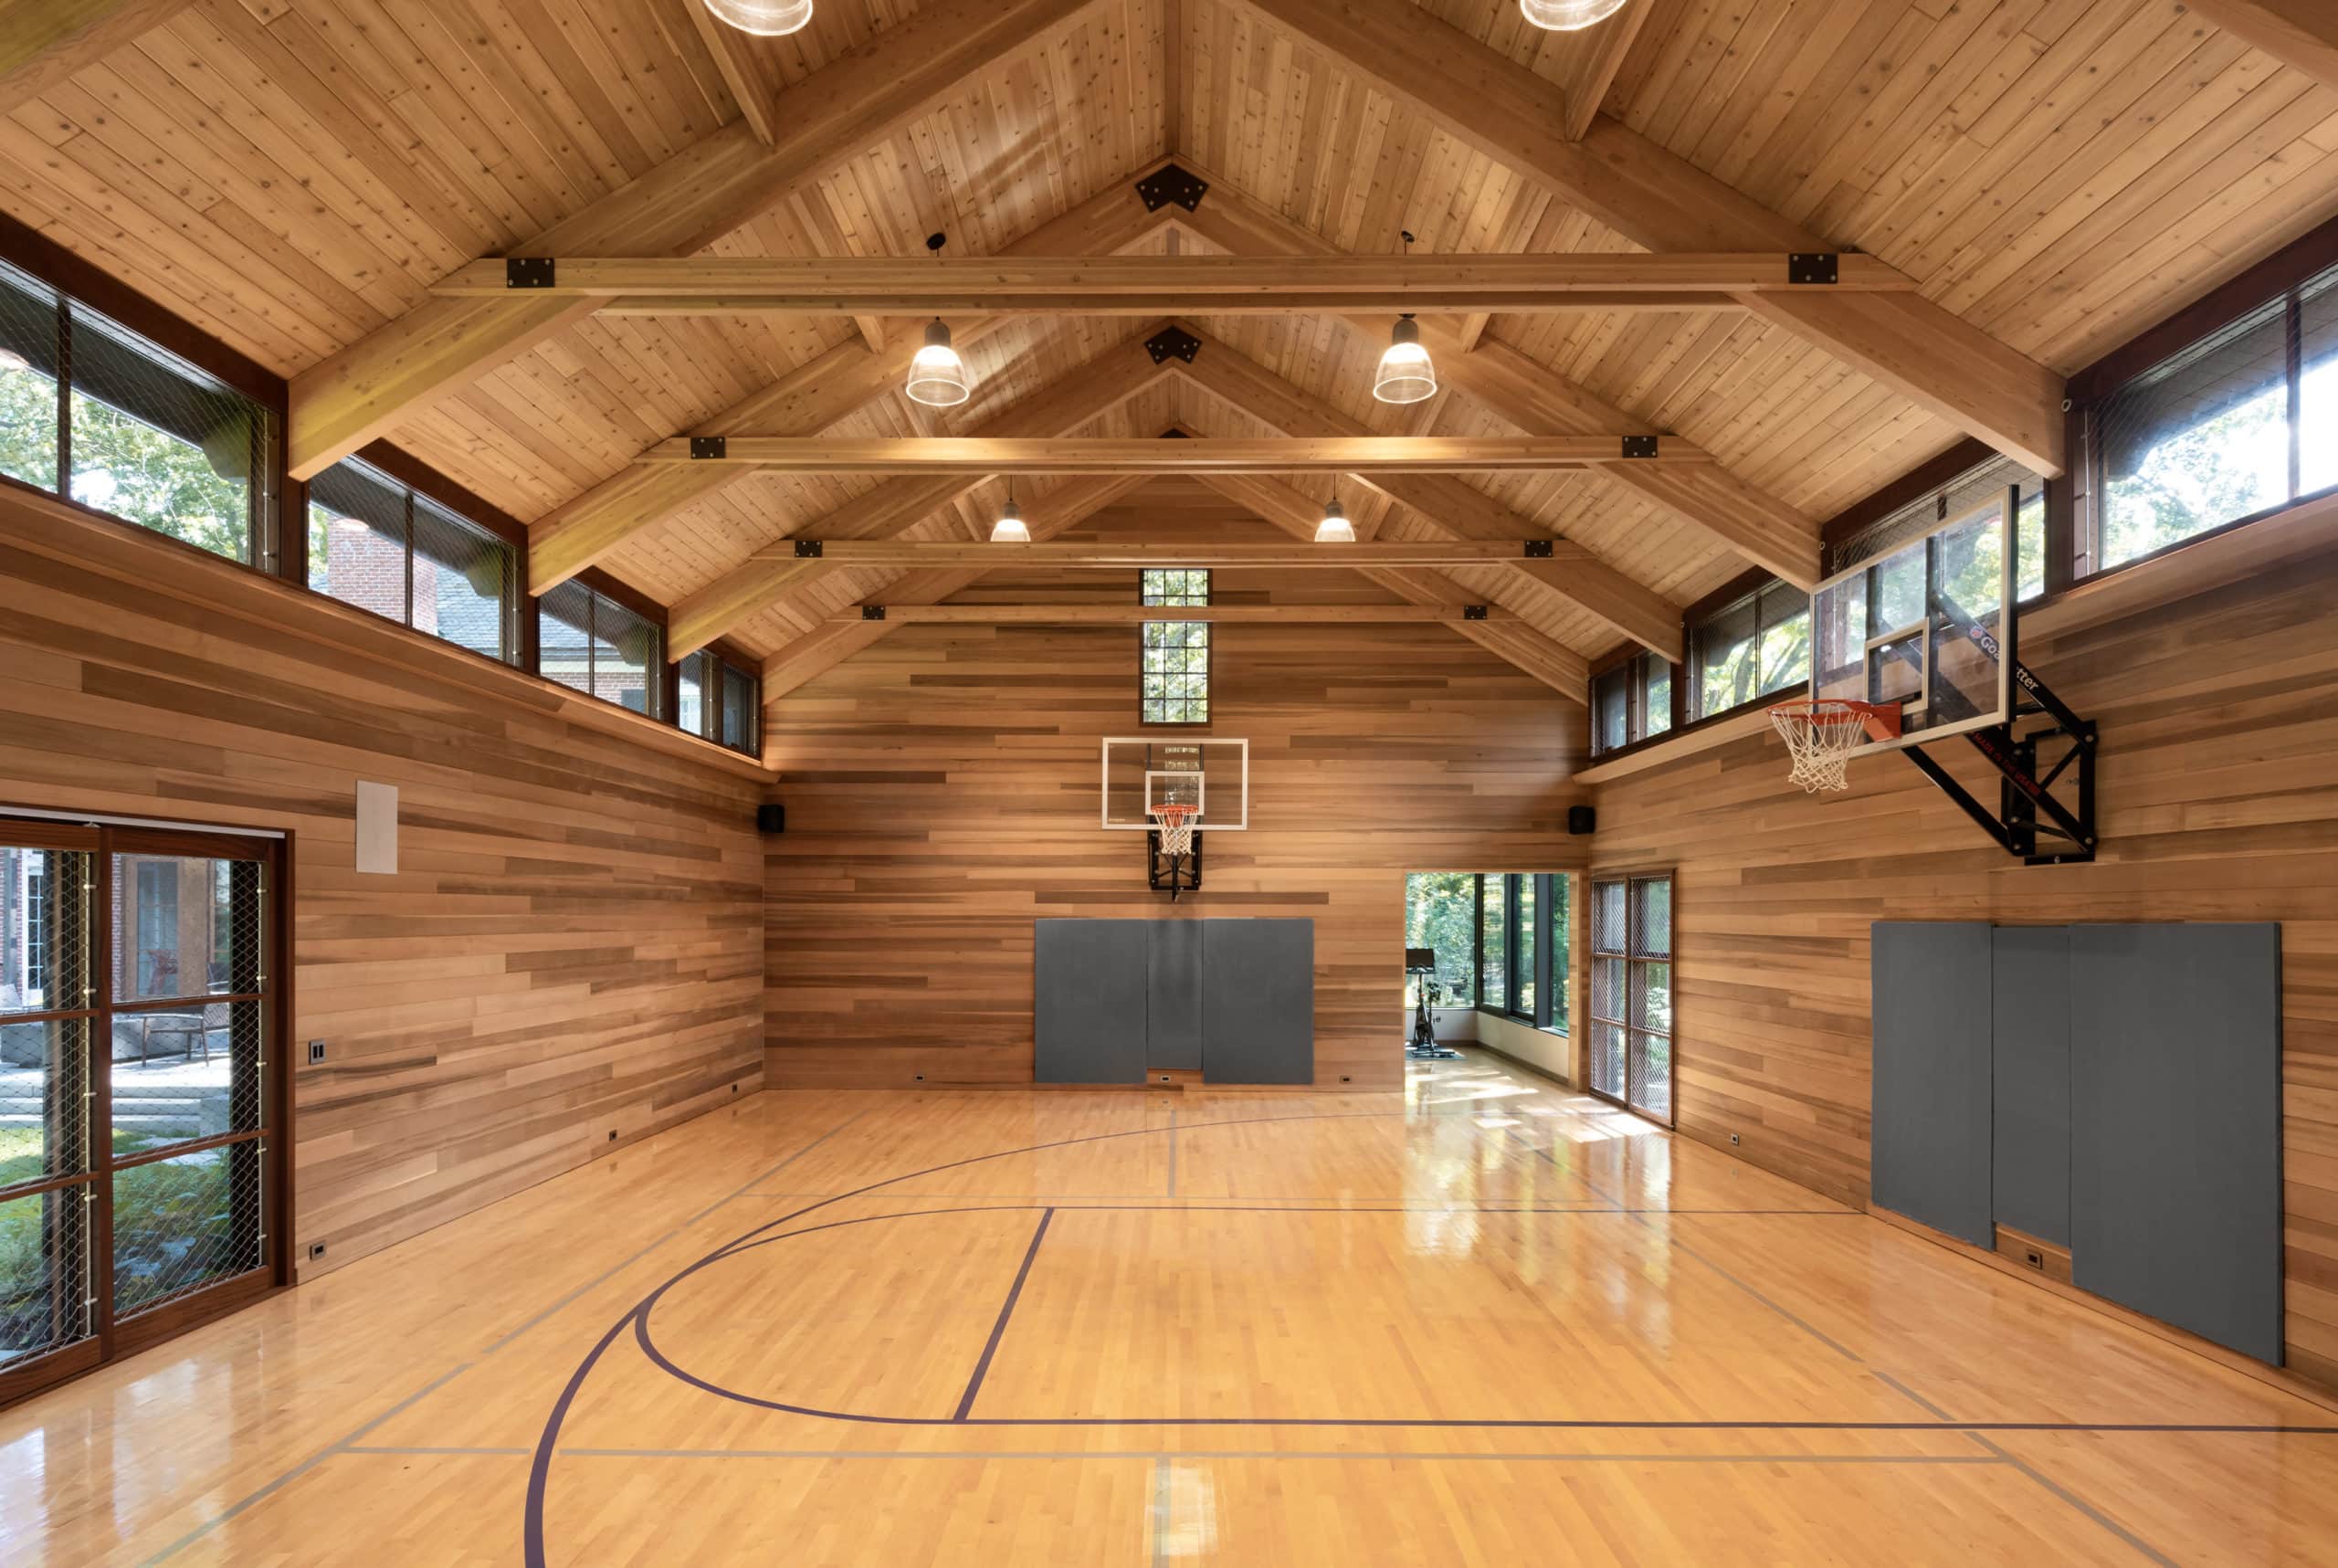 indoor basketball court images